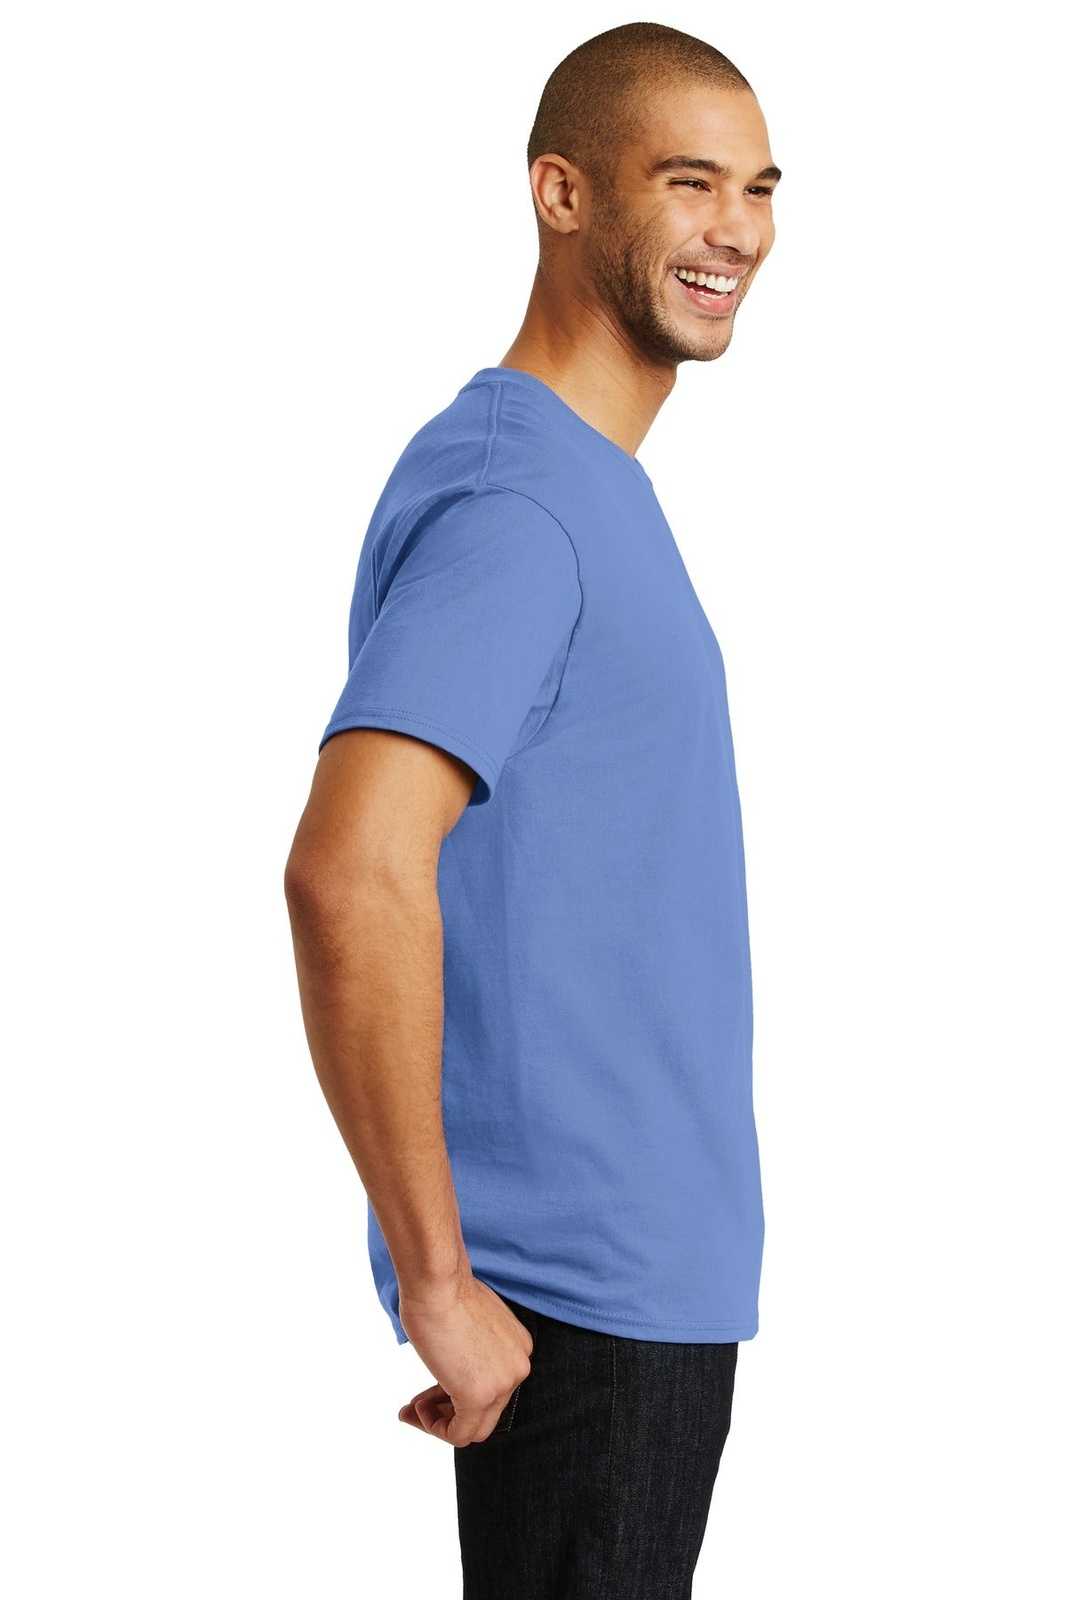 Hanes 5250 Tagless 100% Cotton T-Shirt - Carolina Blue - HIT a Double